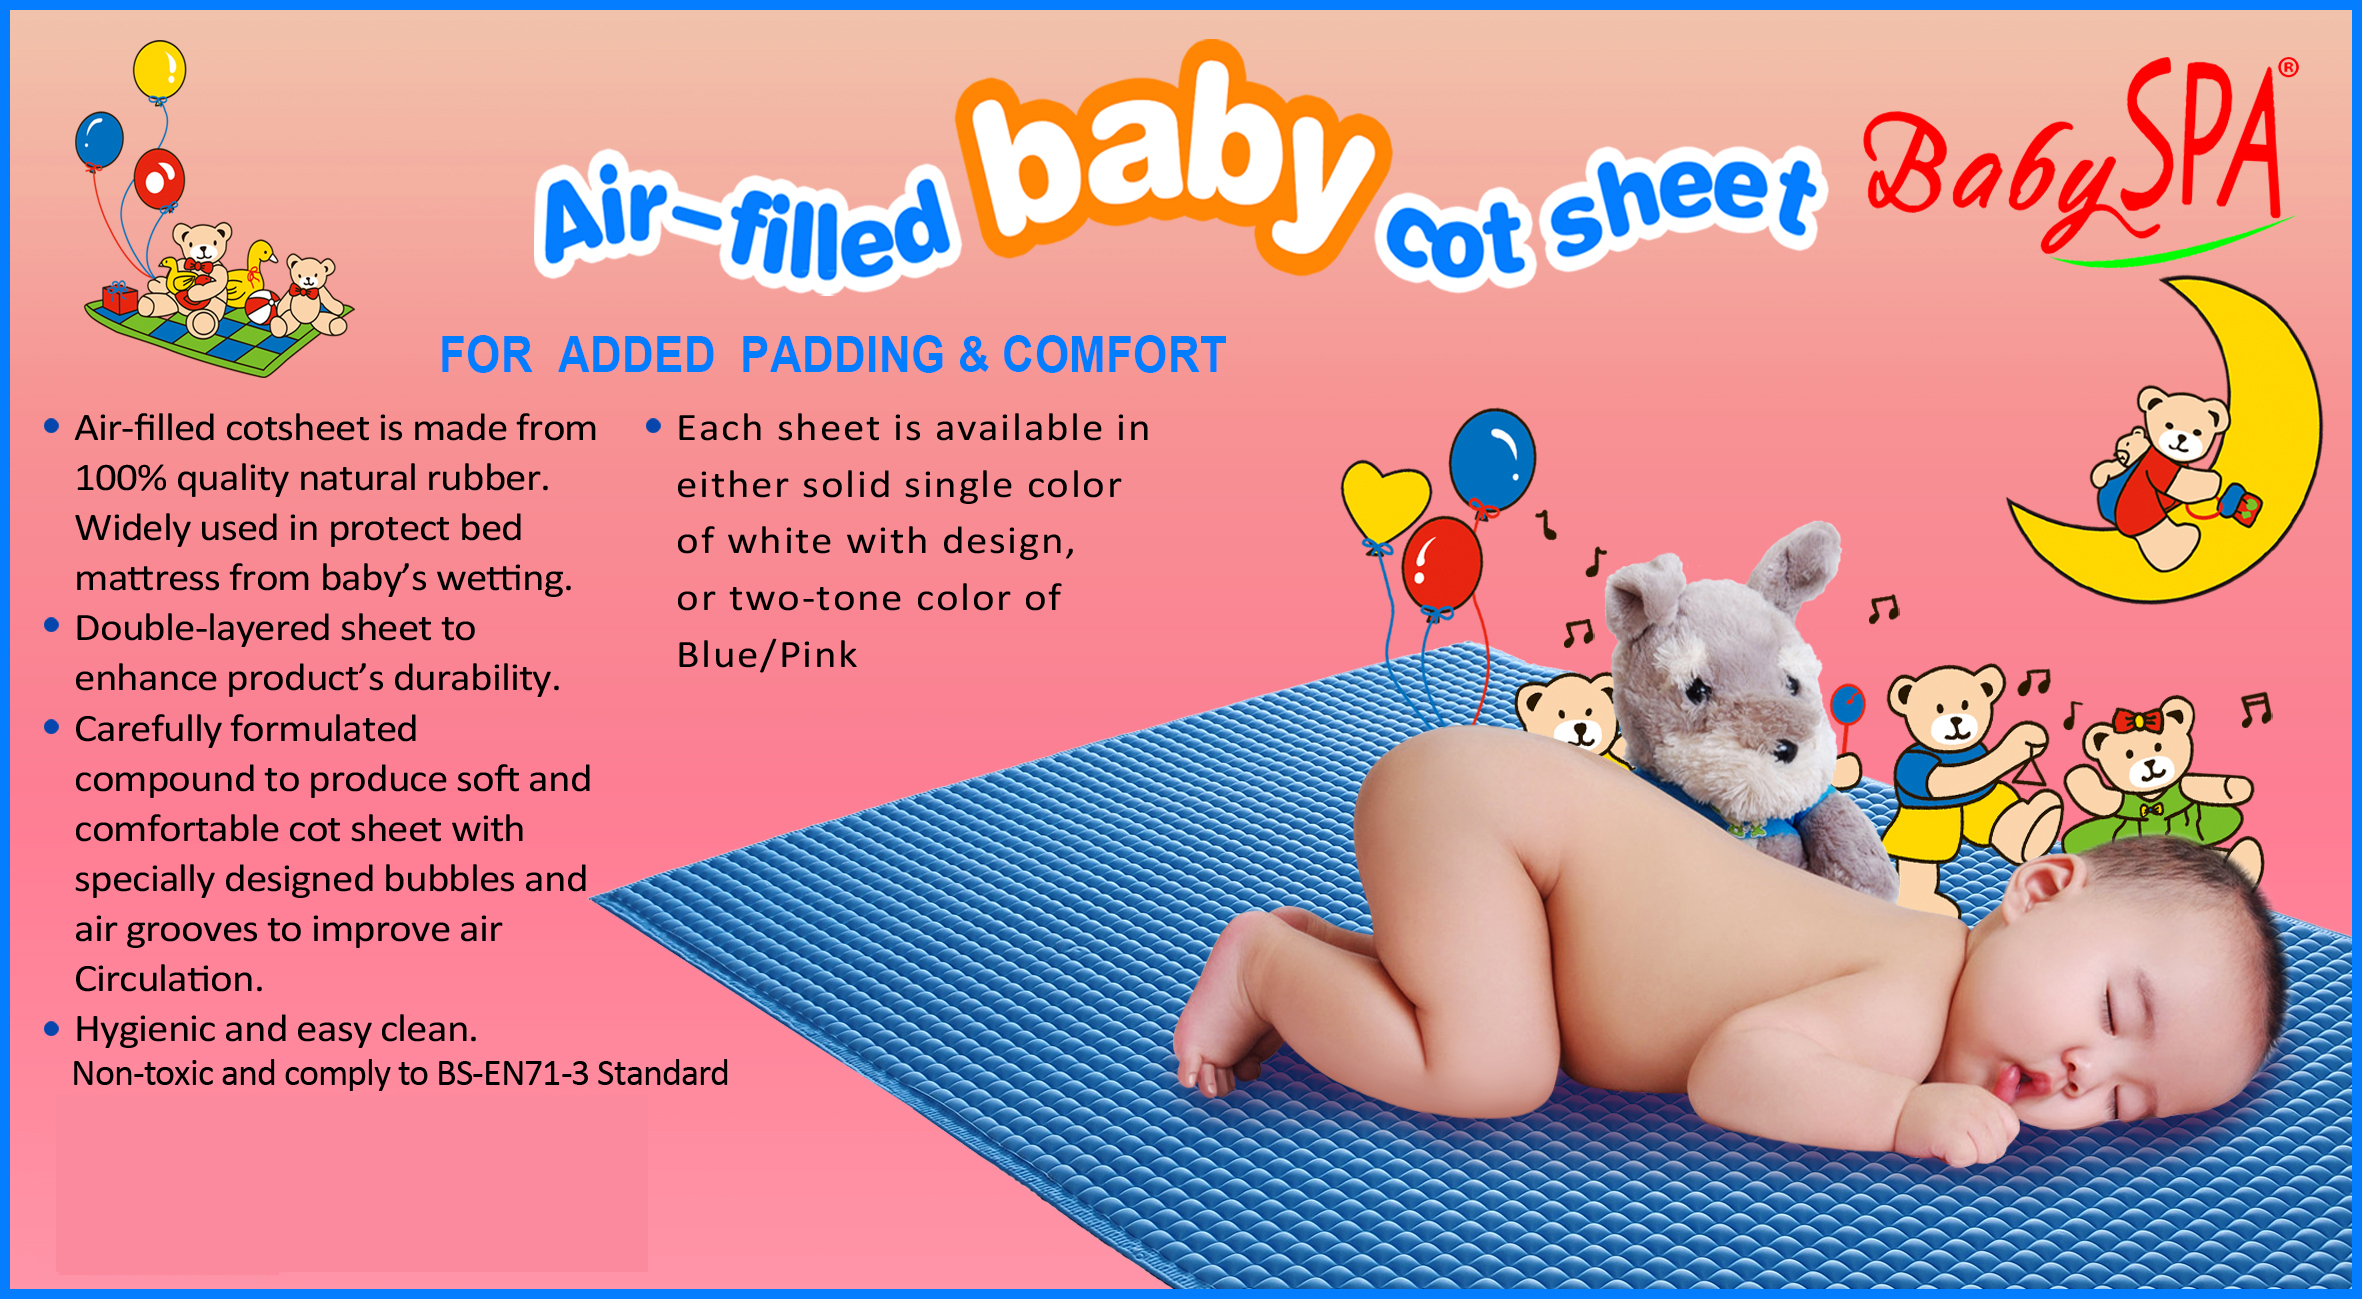 baby-fair BabySPA Cot Sheet